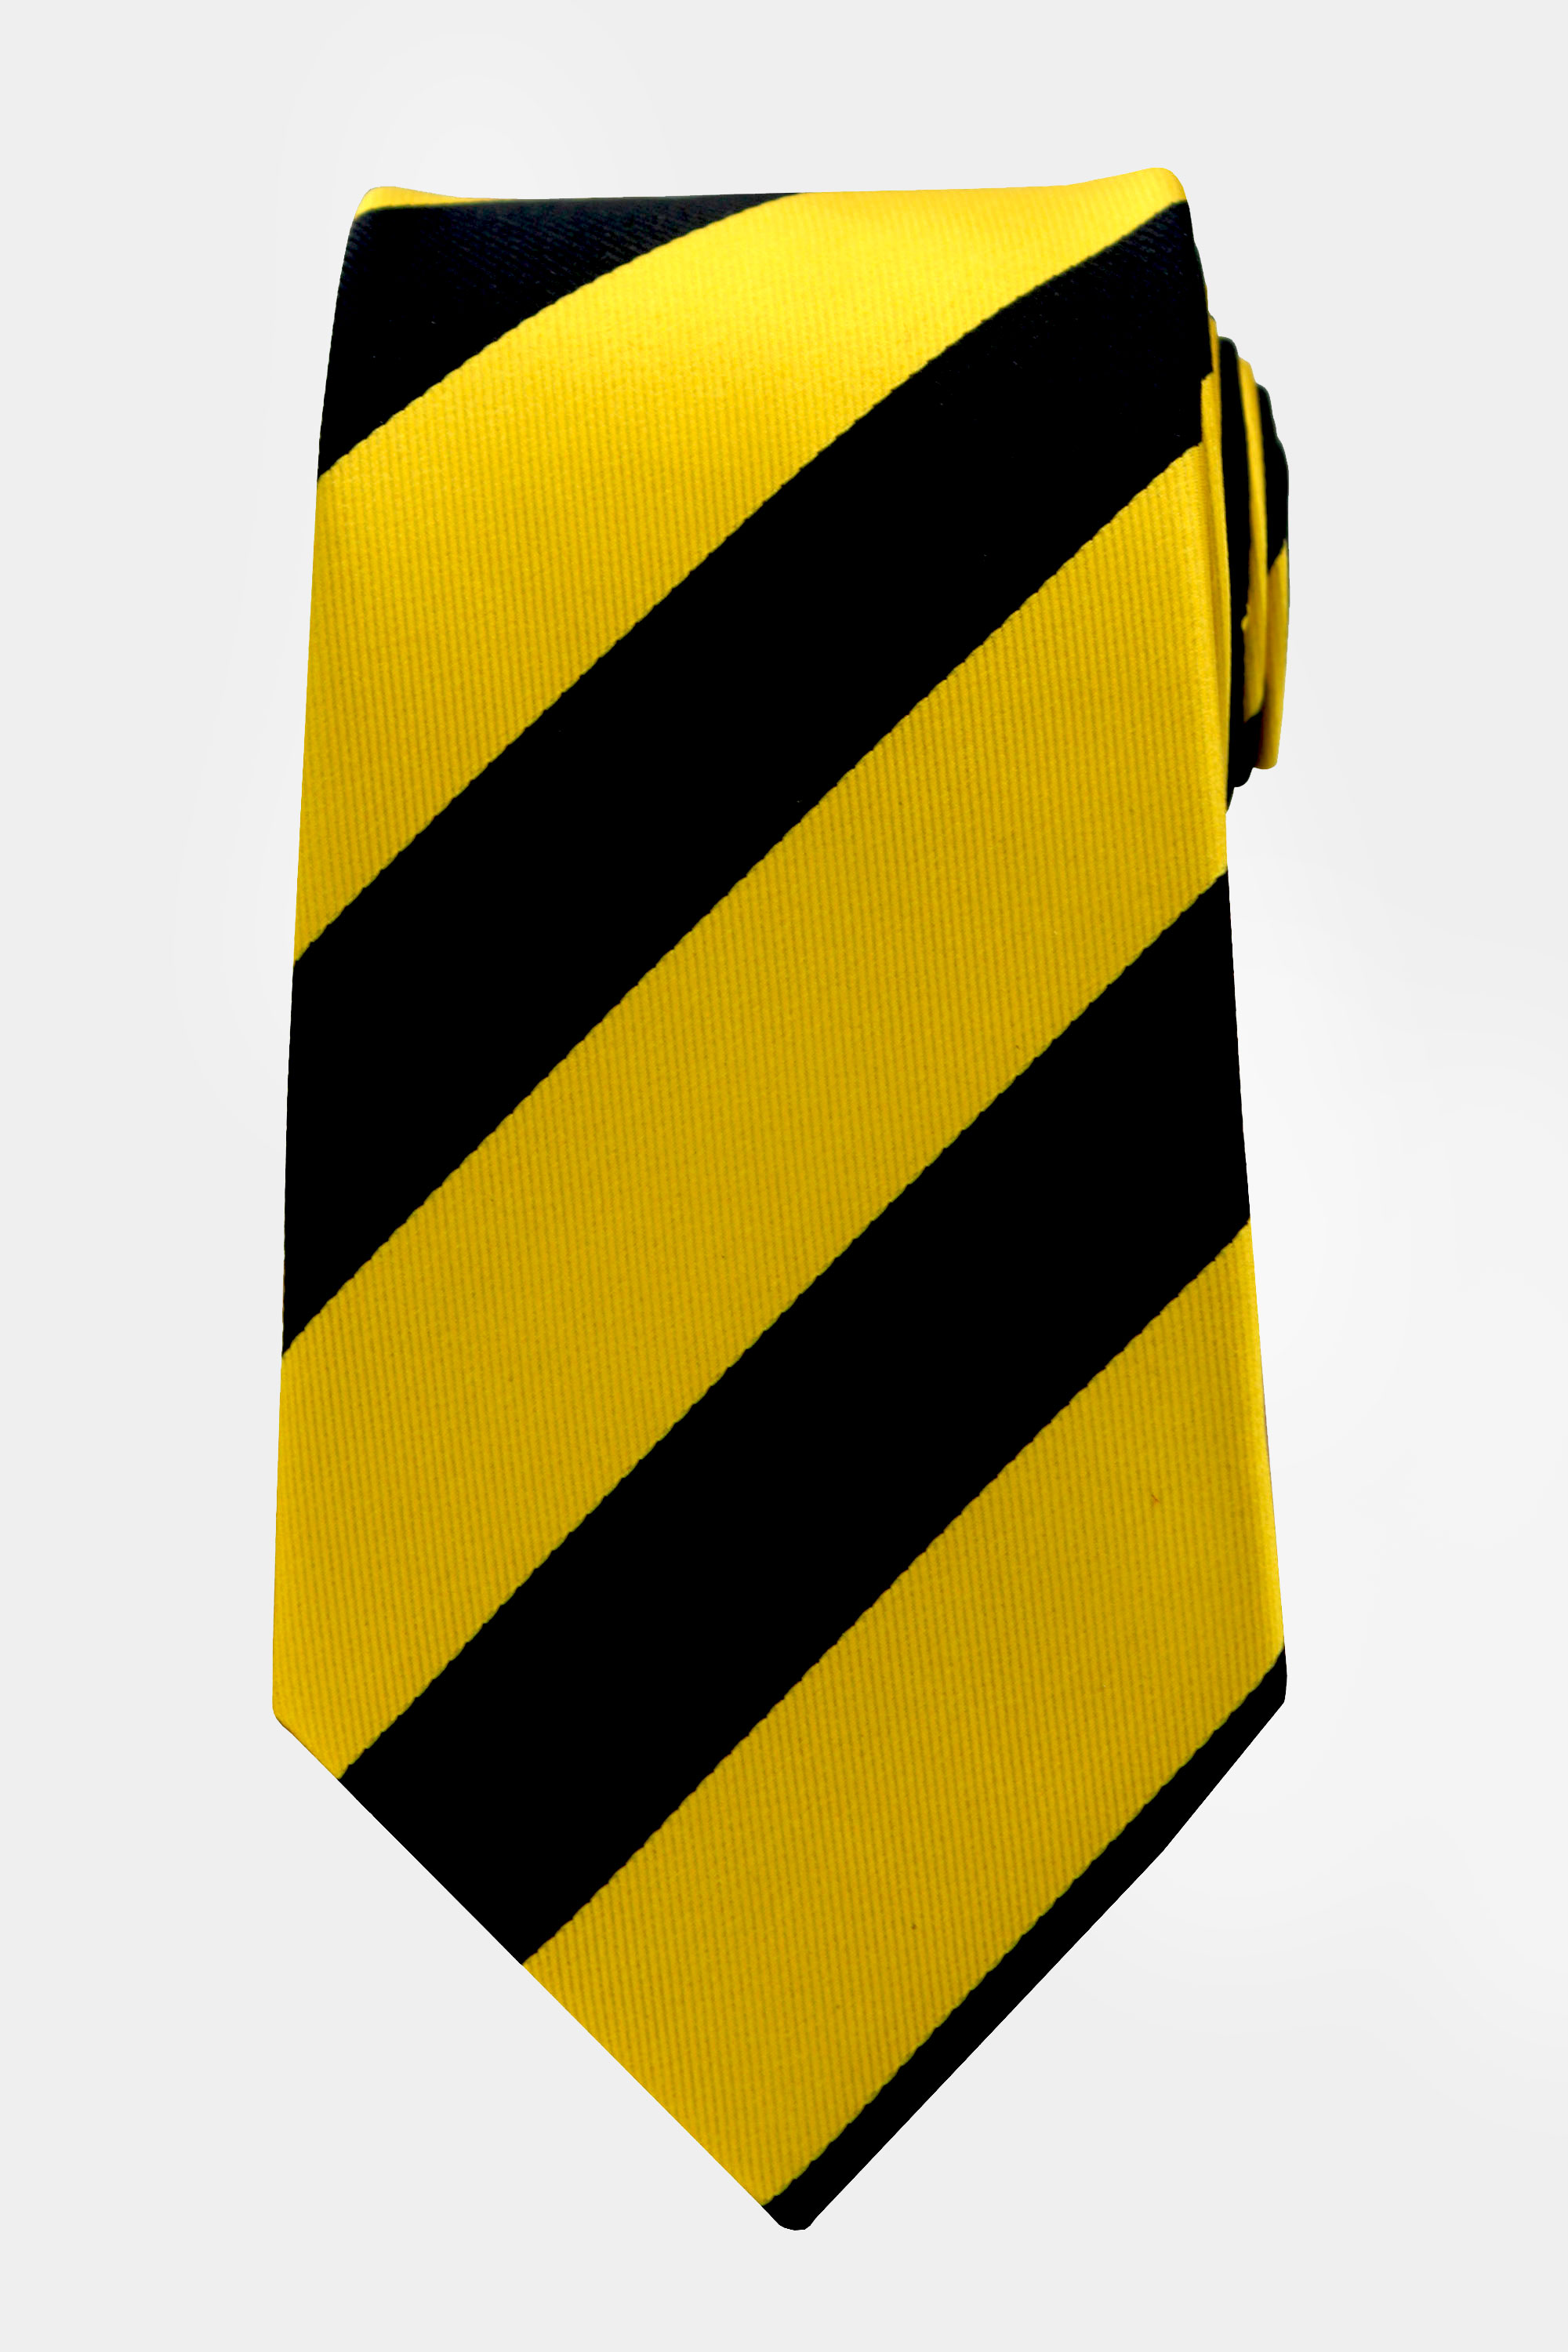 Gold-and-Black-Striped-Tie-set-from-Gentlemansguru.com